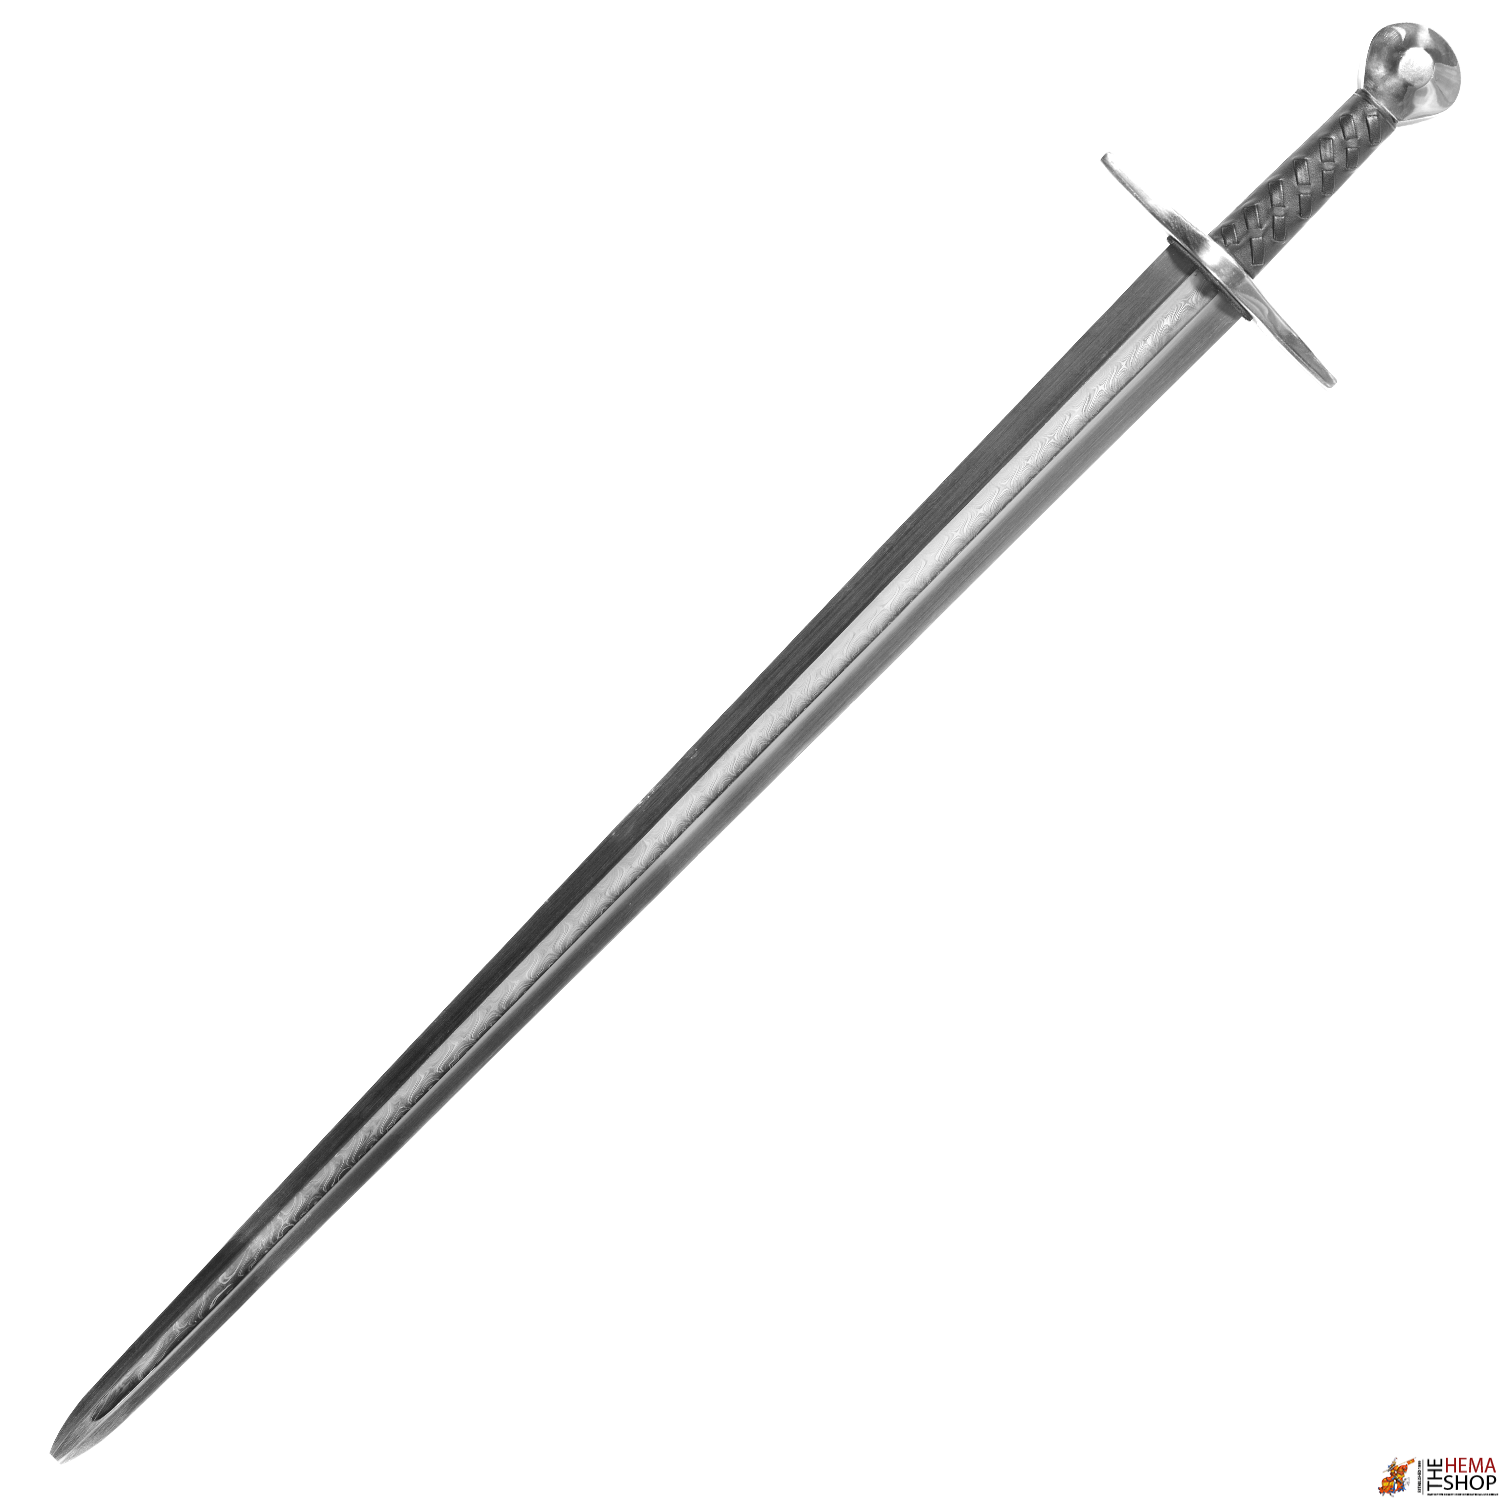 sword clipart knight's sword